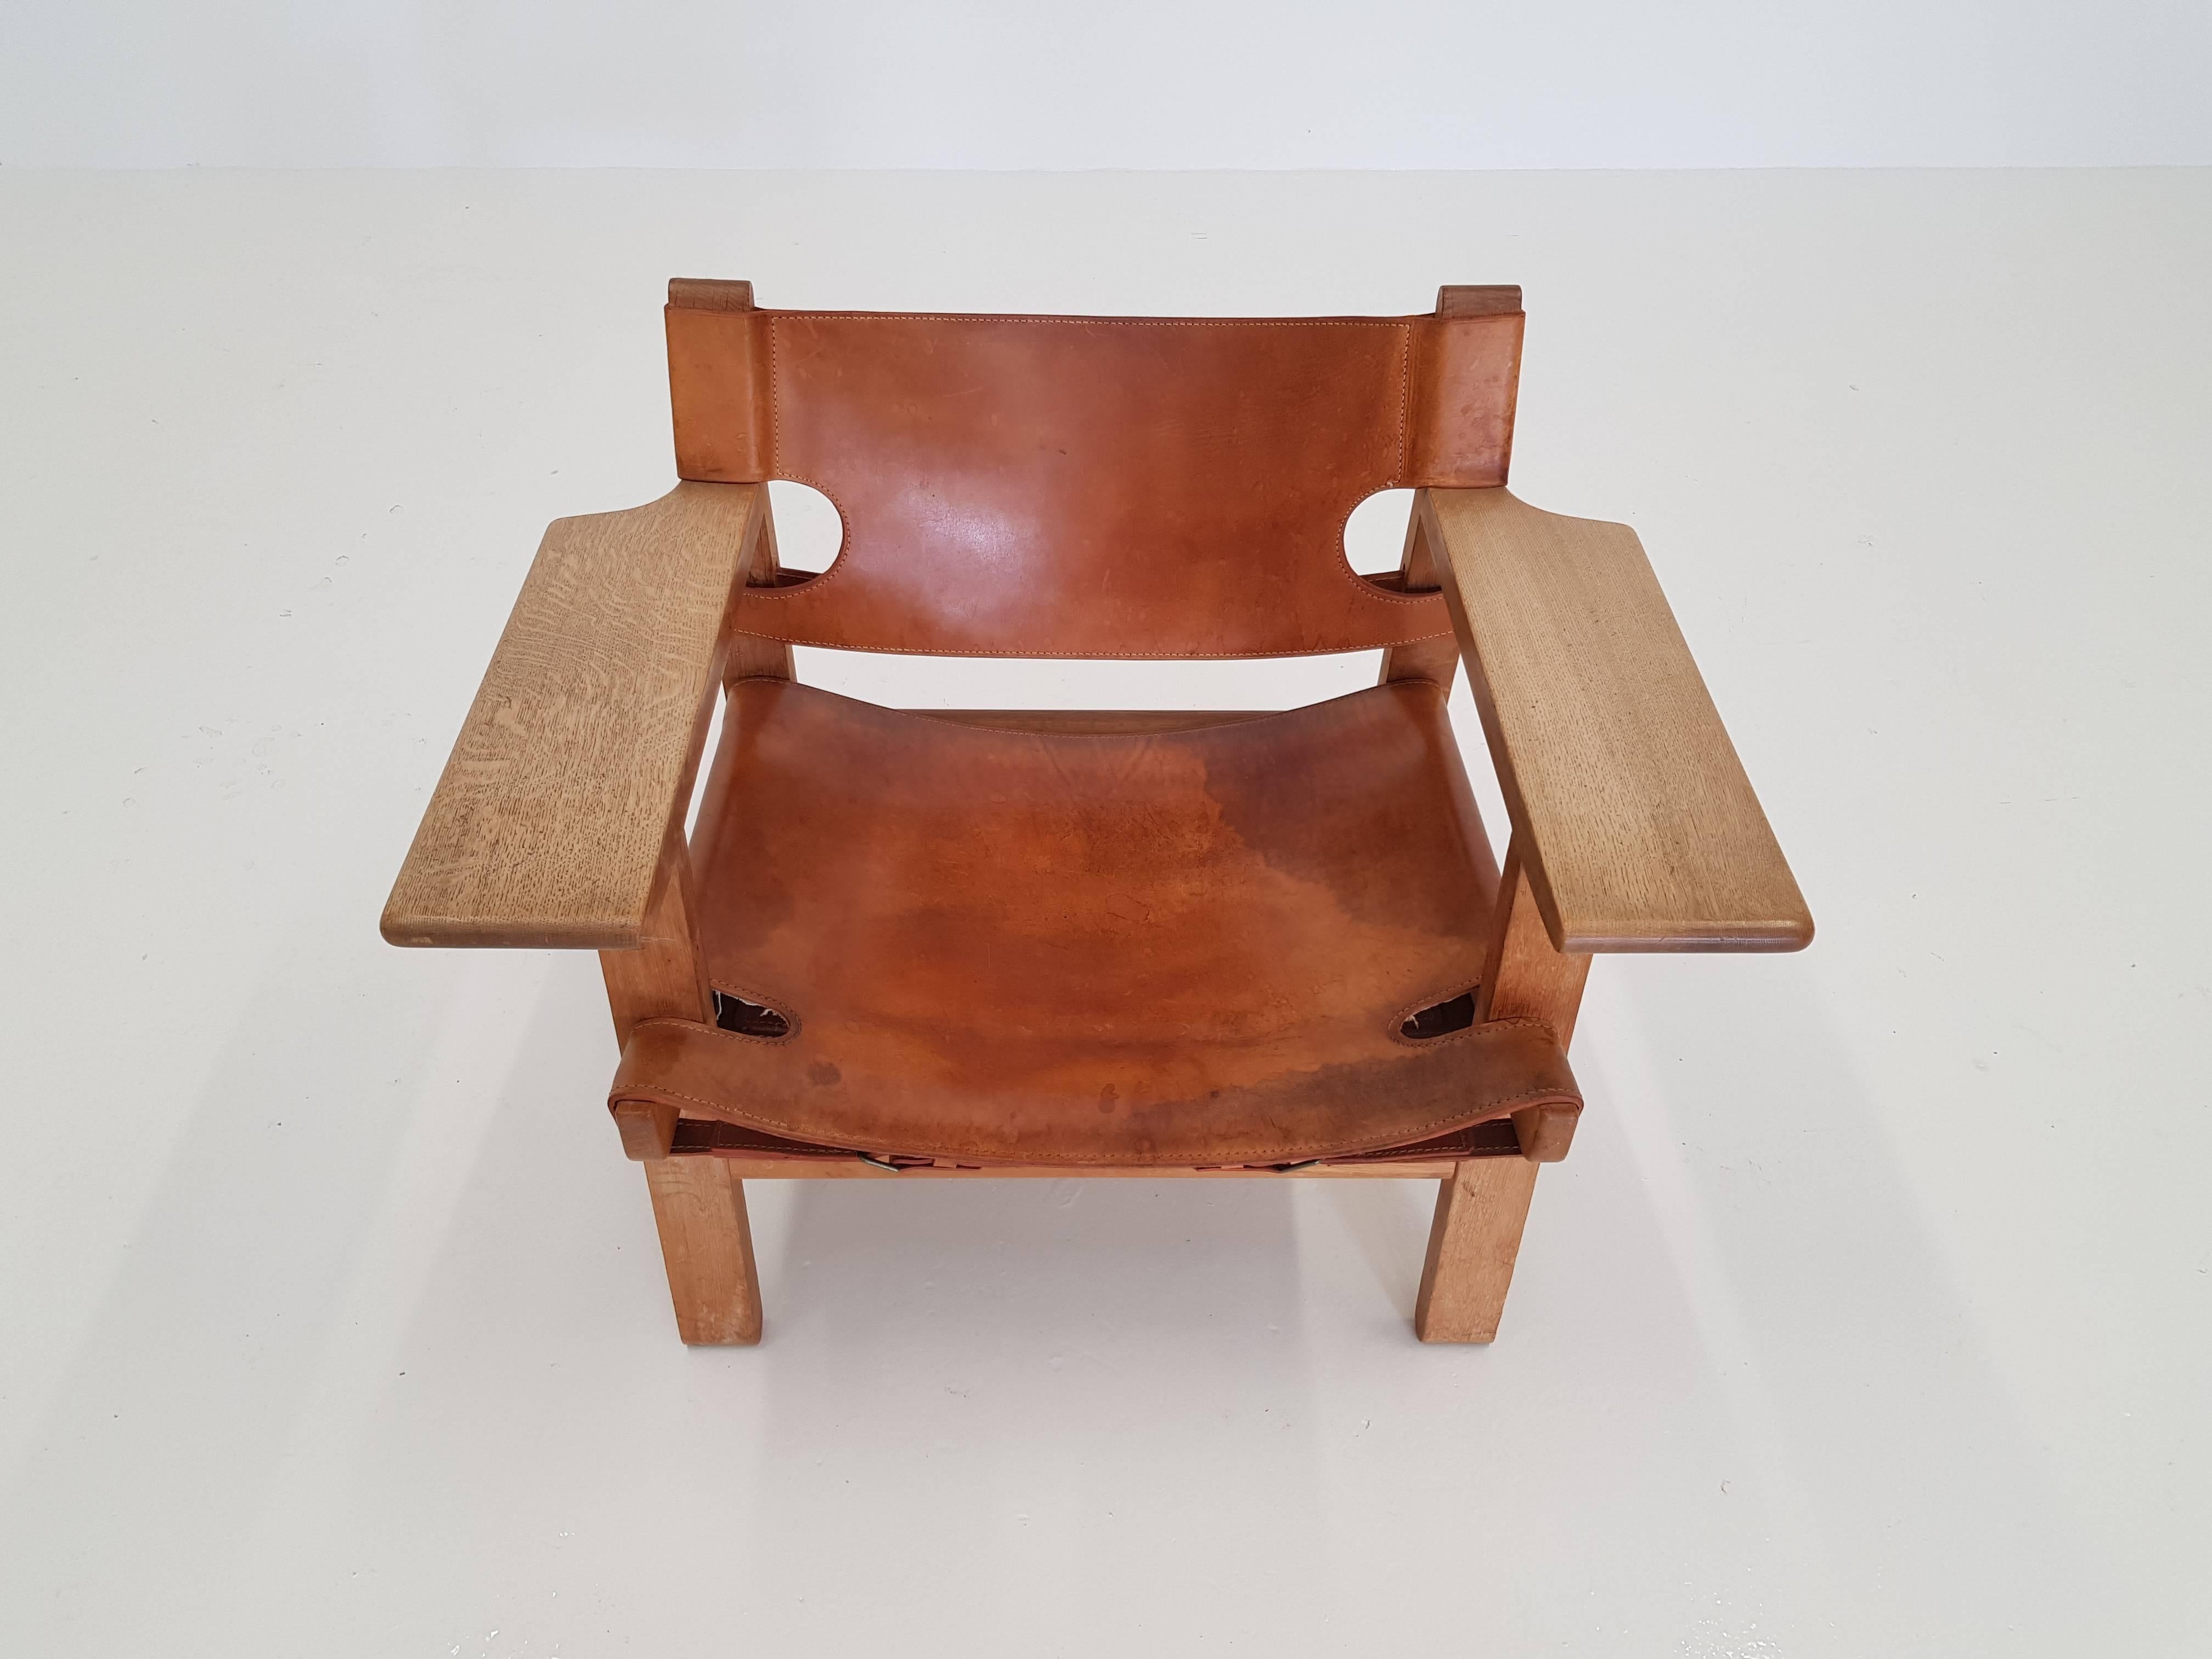 Børge Mogensen Spanish Chair, Designed 1958, Produced by Fredericia Stolefabrik 1